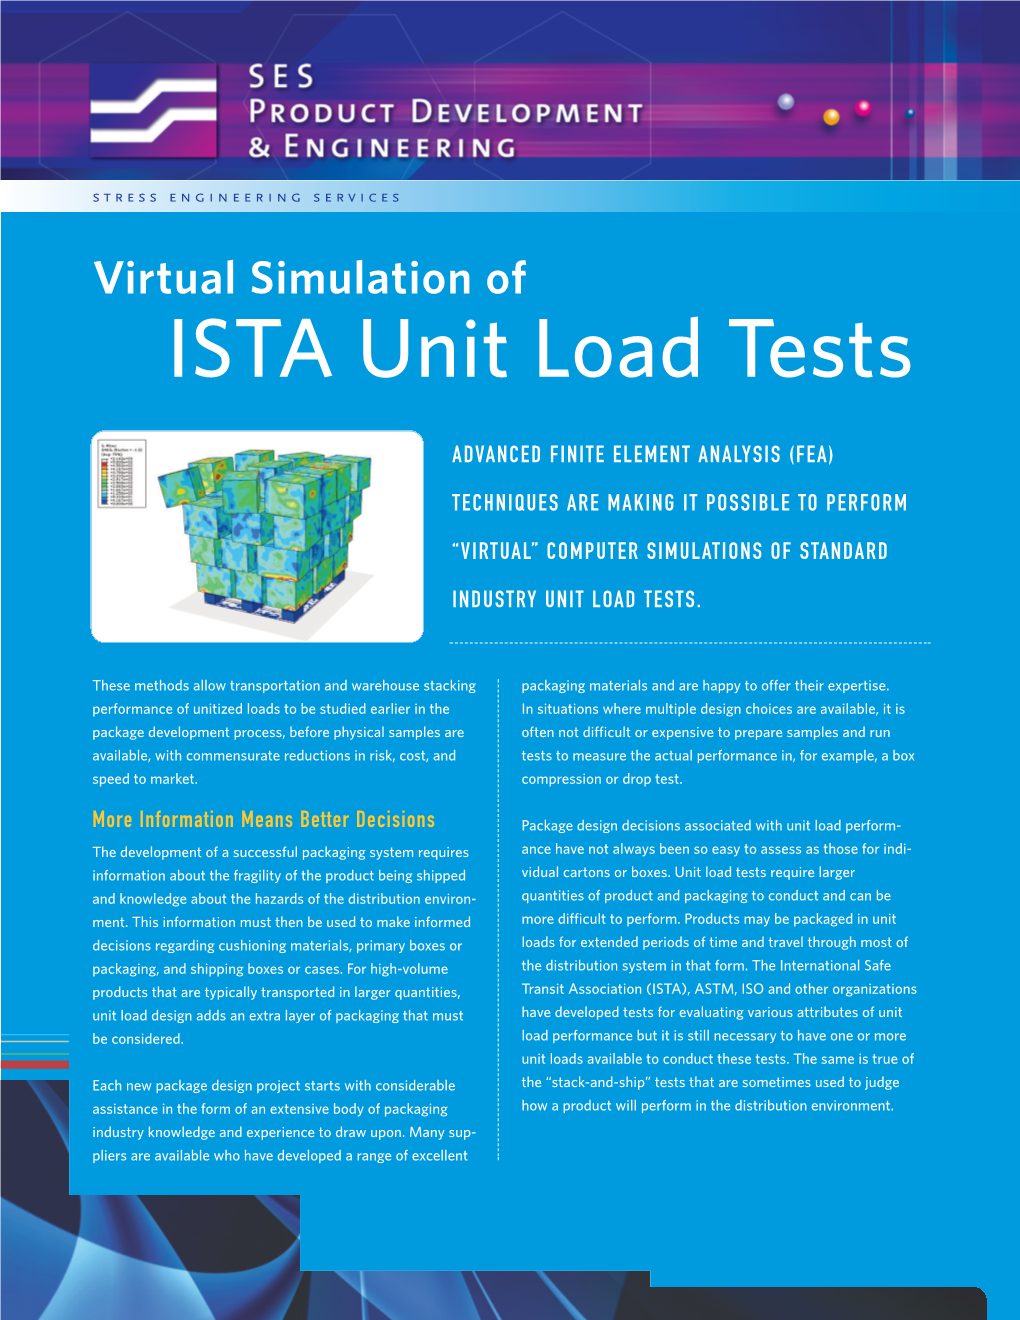 ISTA Unit Load Tests